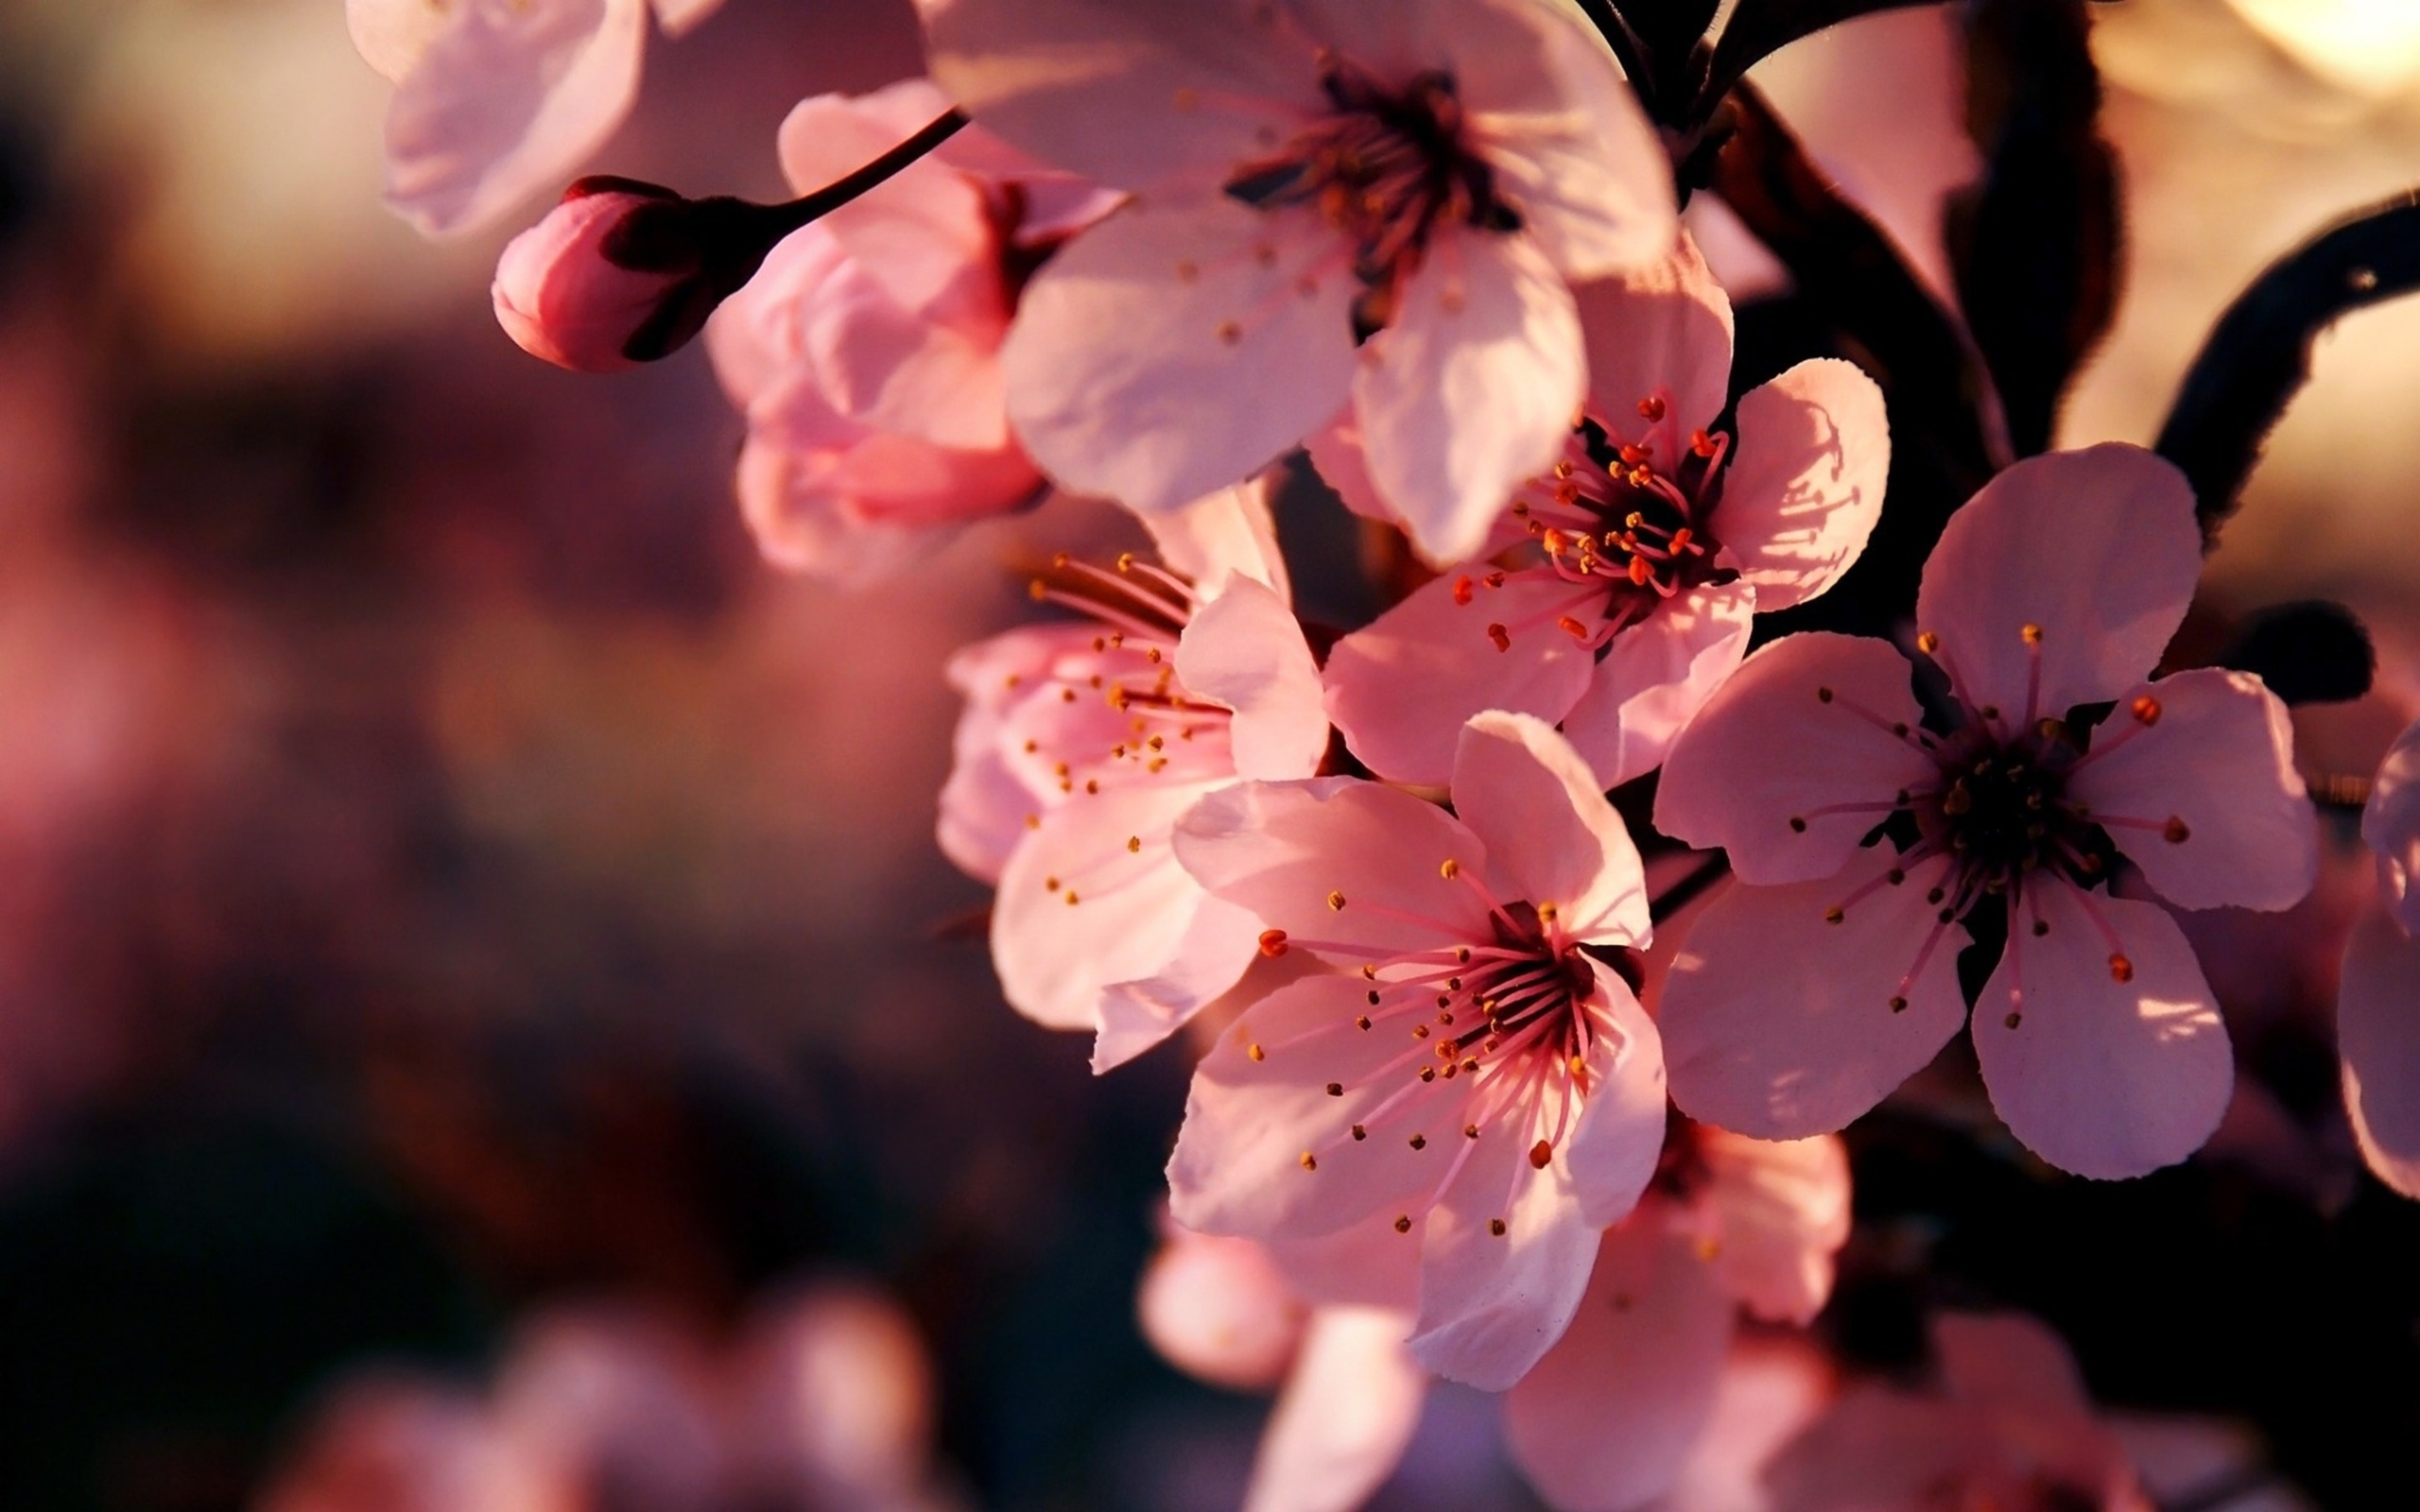 Картинки на телефон на заставку. Цветущая вишня. Цветы Сакуры. Розовые цветы. Японские цветы.